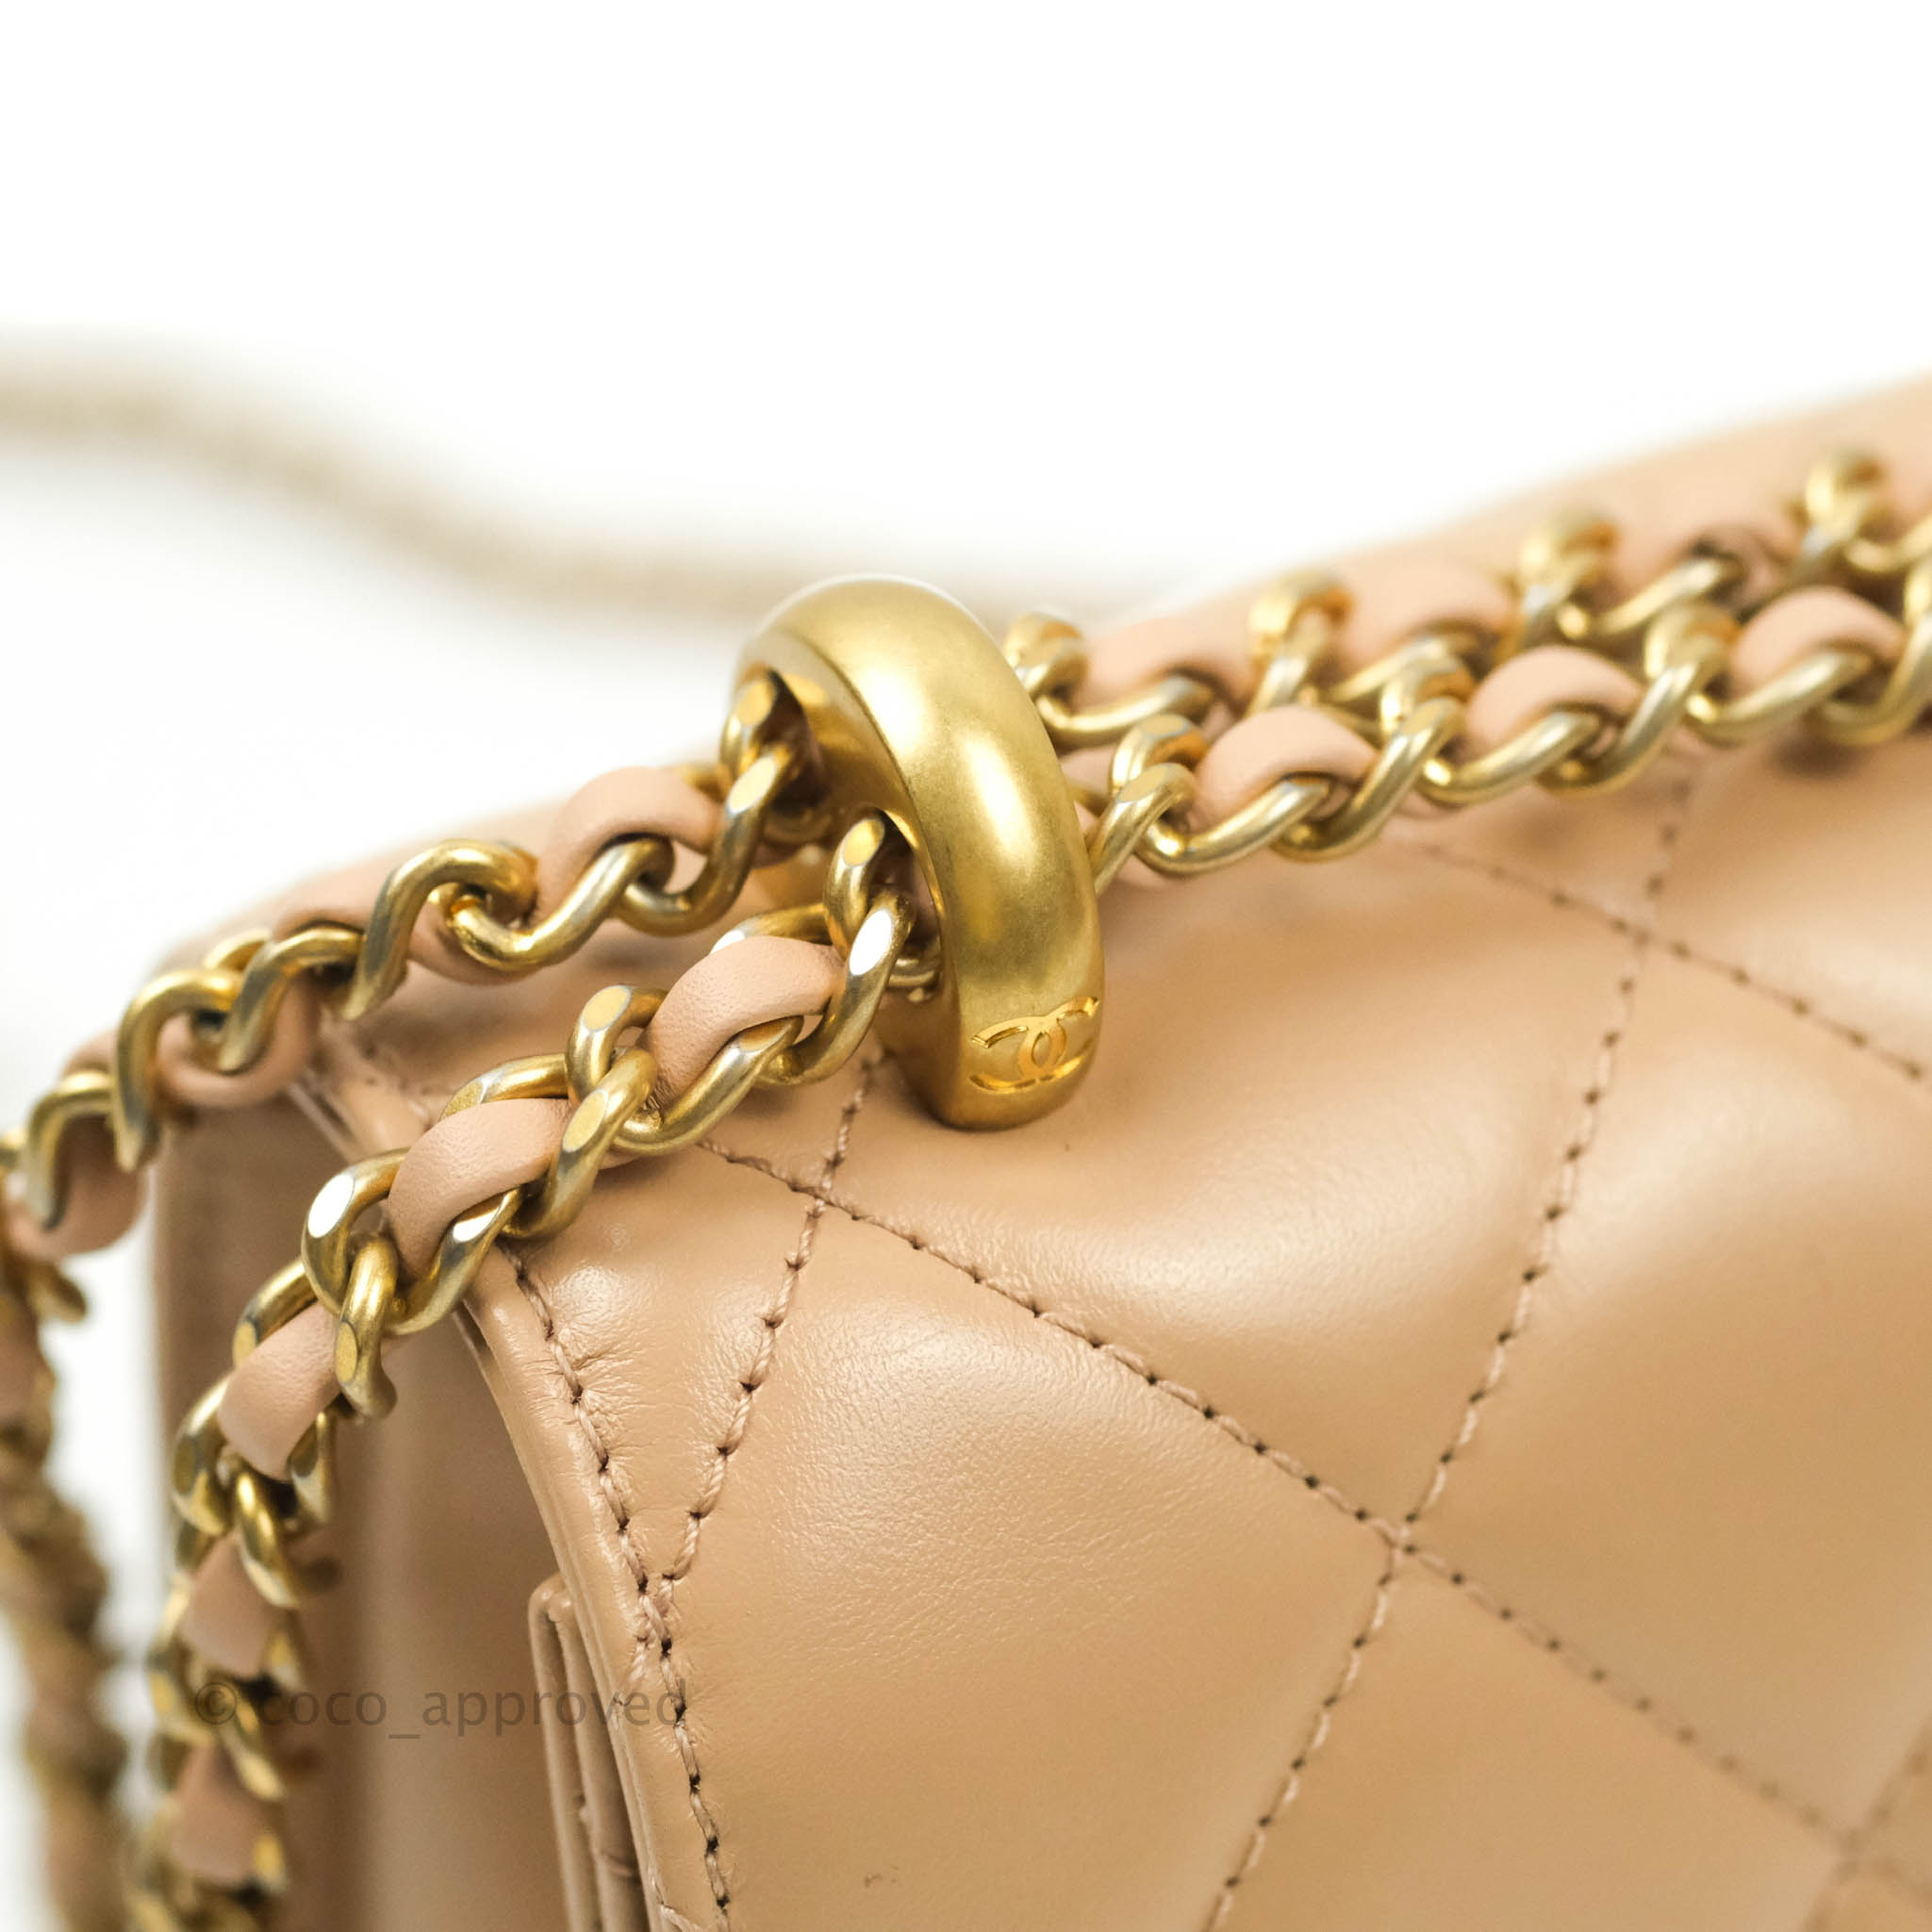 chanel beige quilted handbag